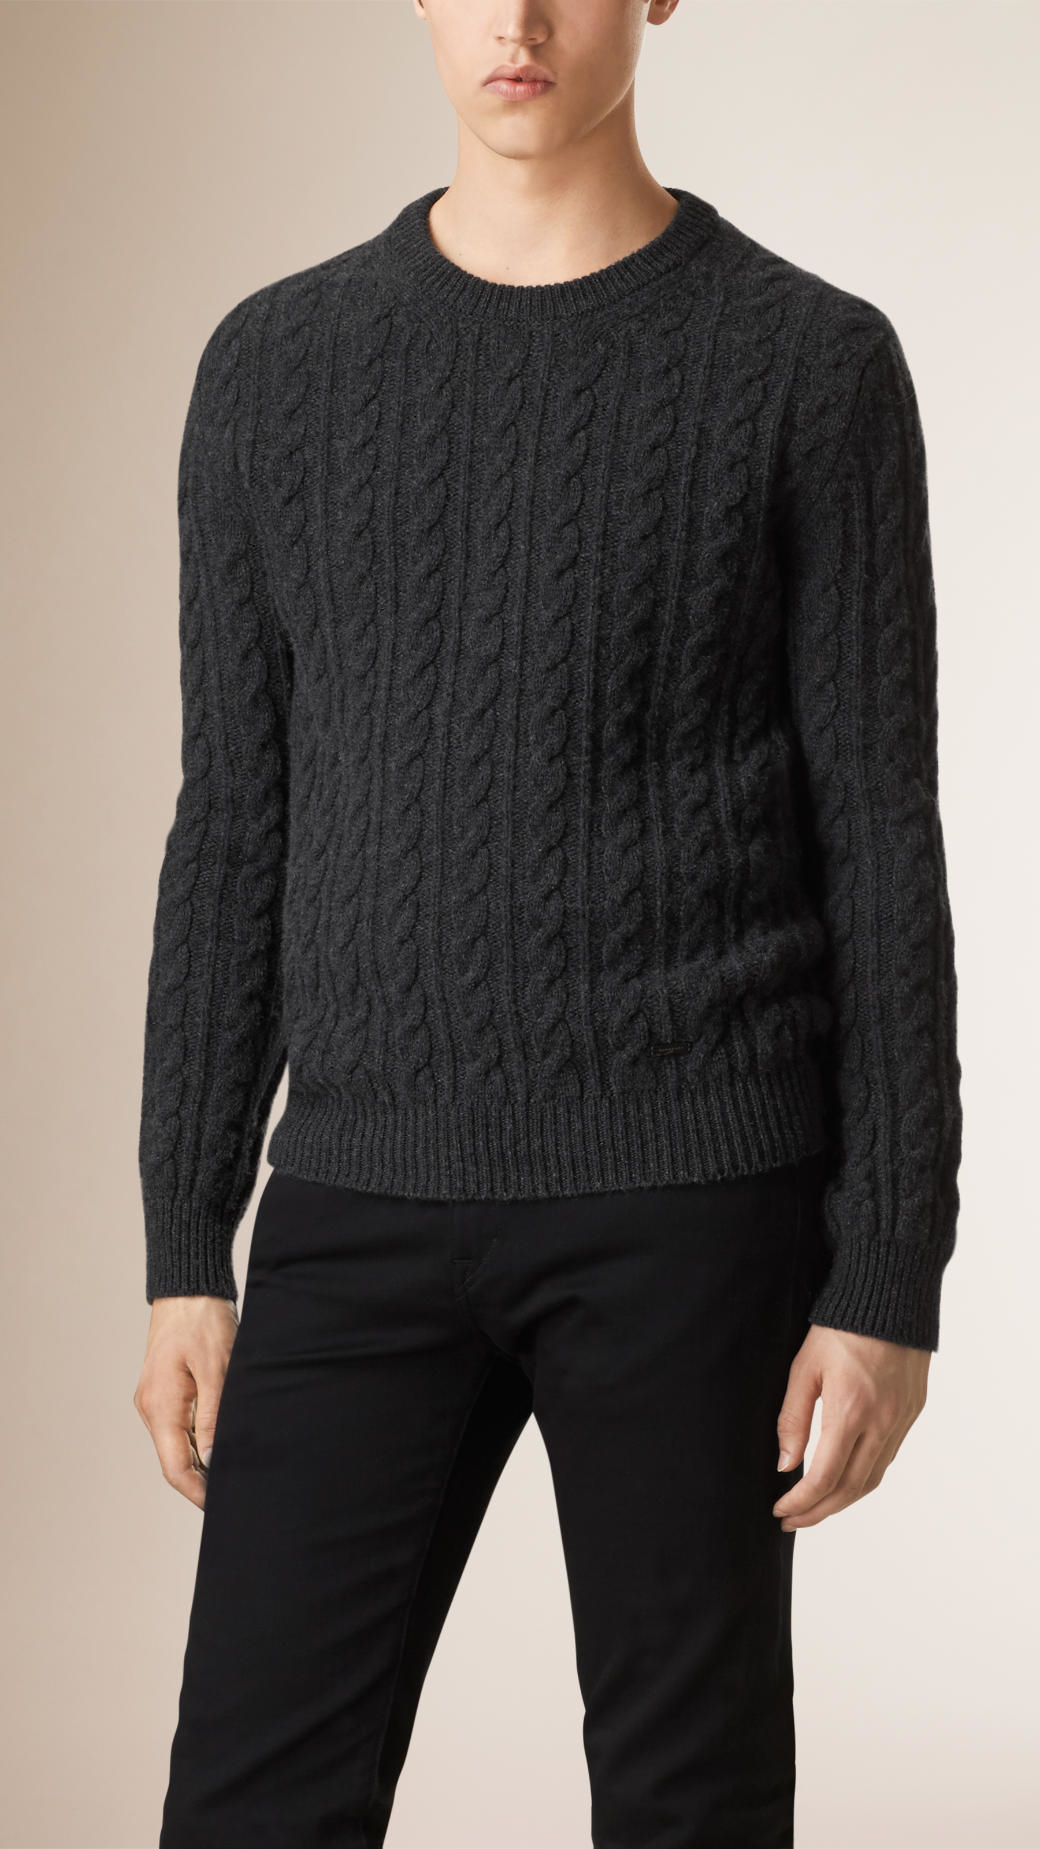 burberry mens sweater sale